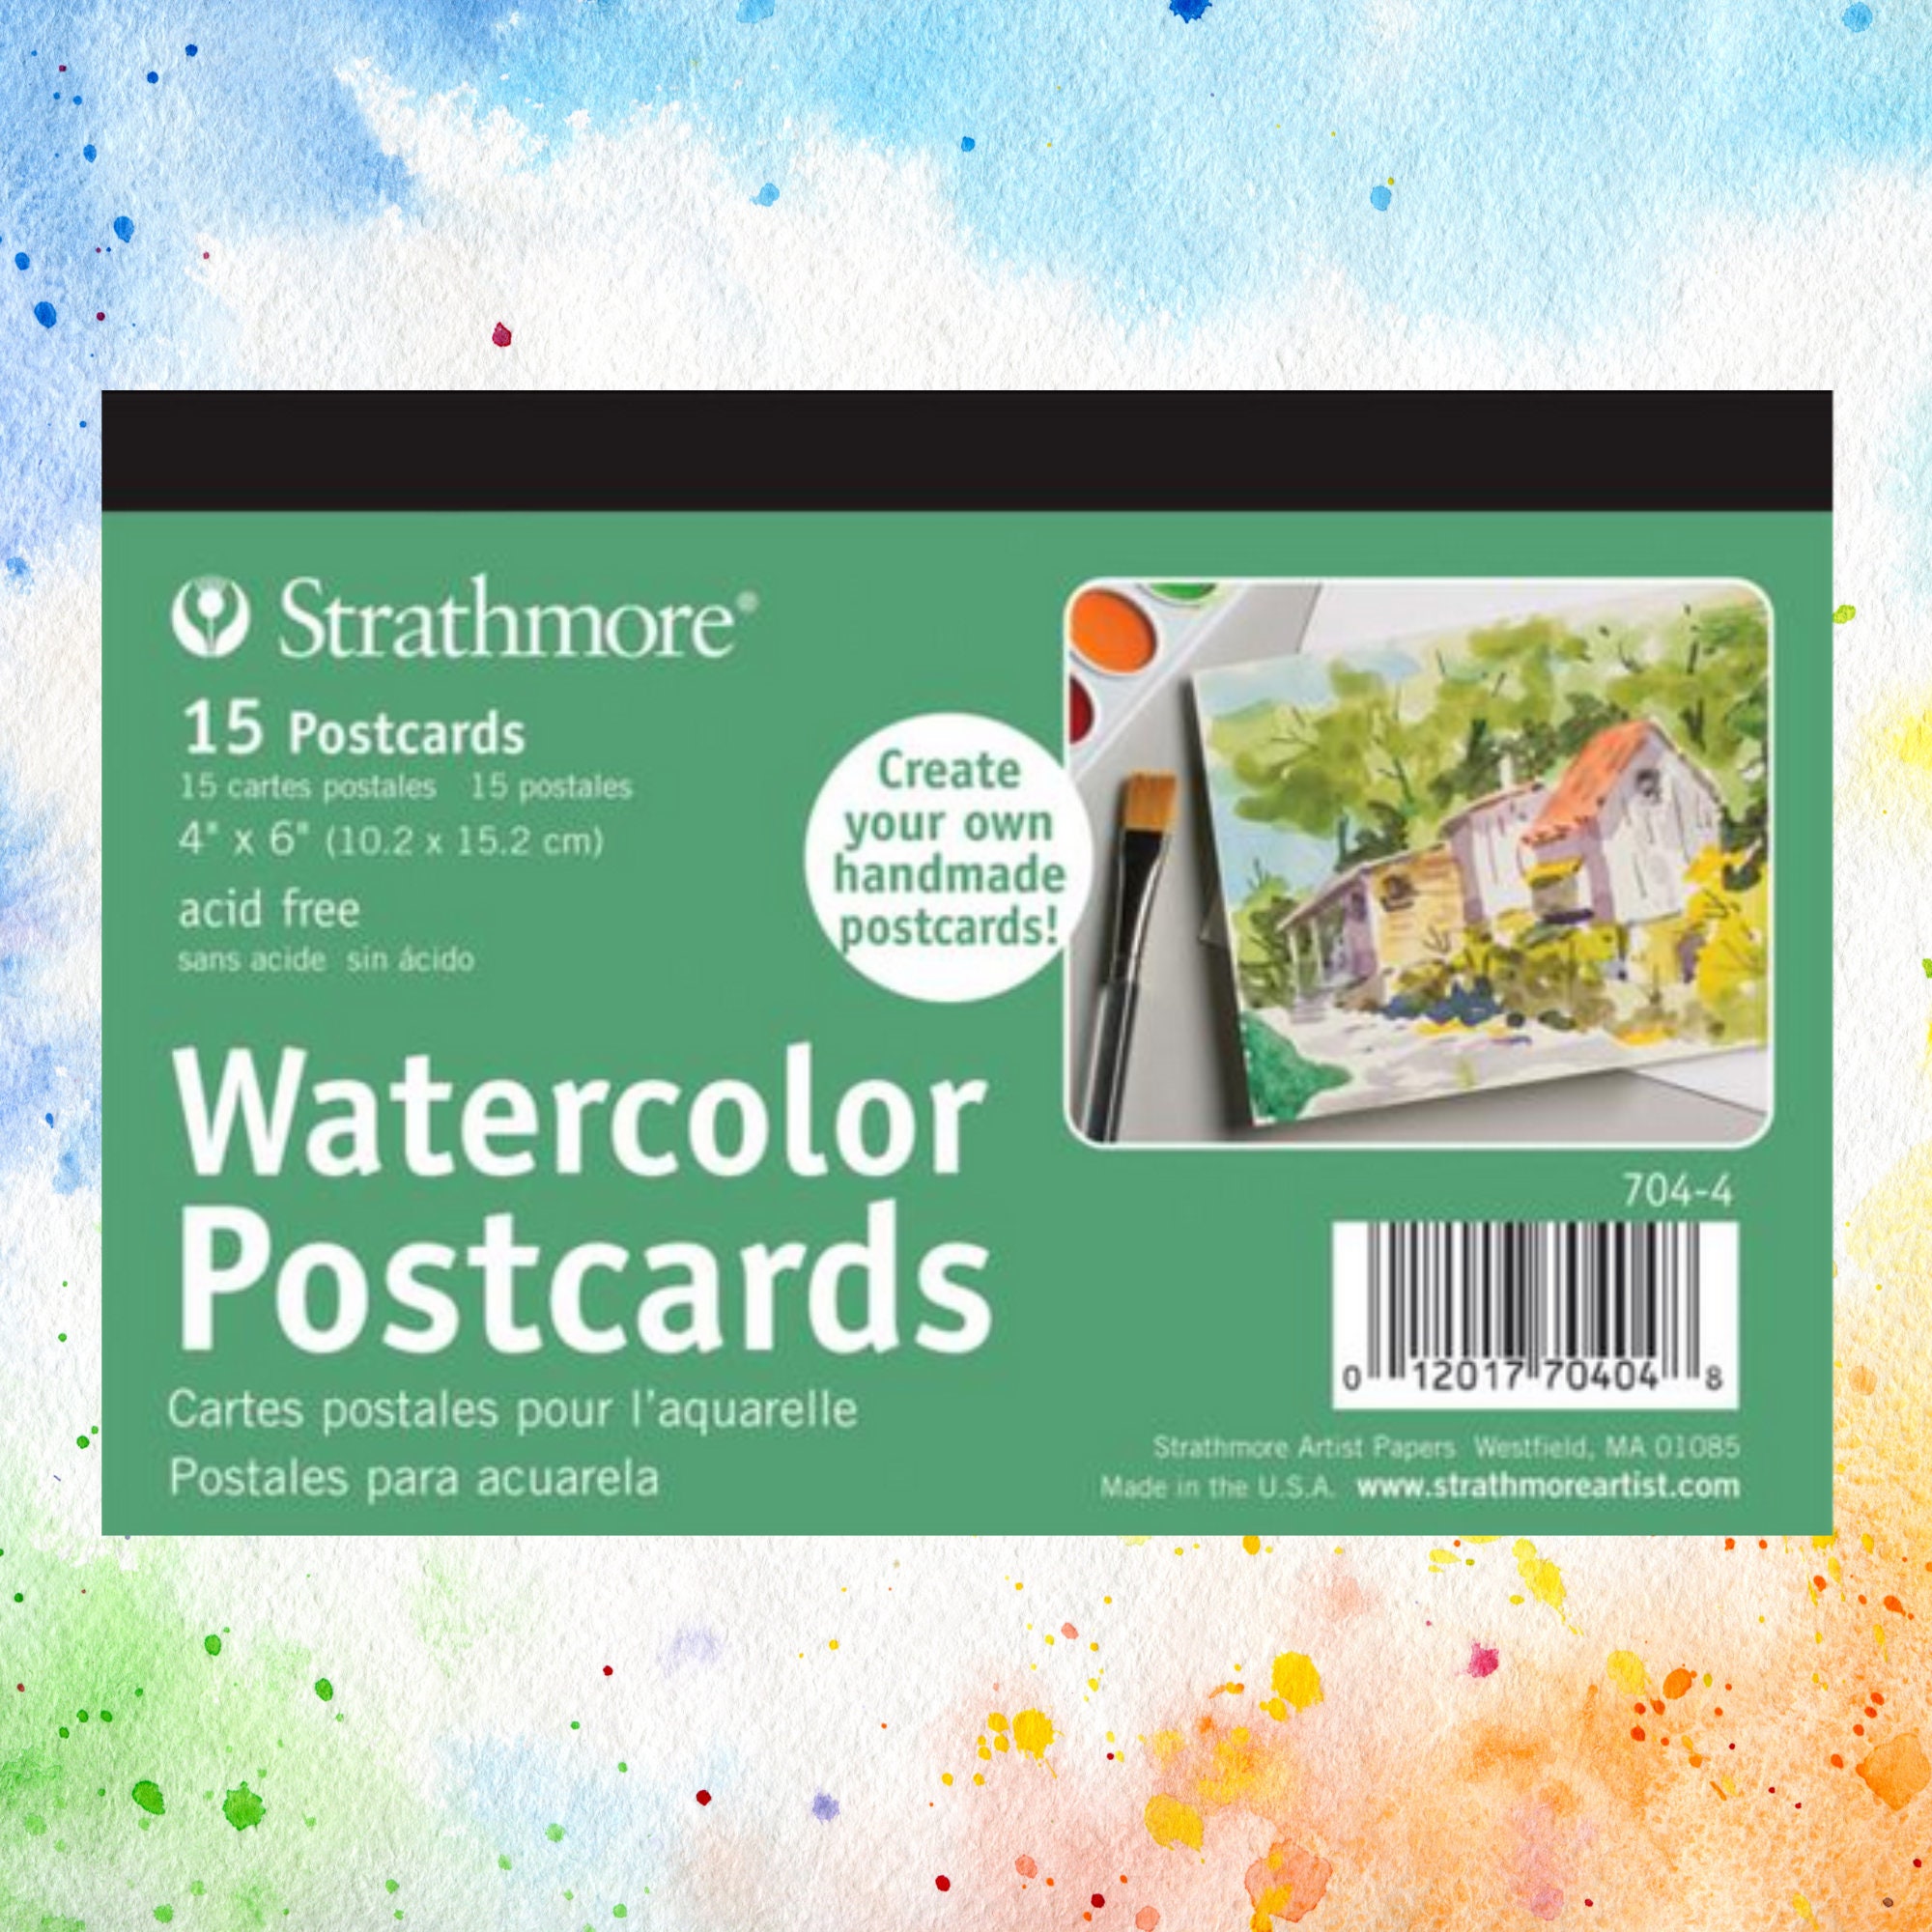 Strathmore 300 Series 3.5x 5 Sketch Pad - 100 Sheets